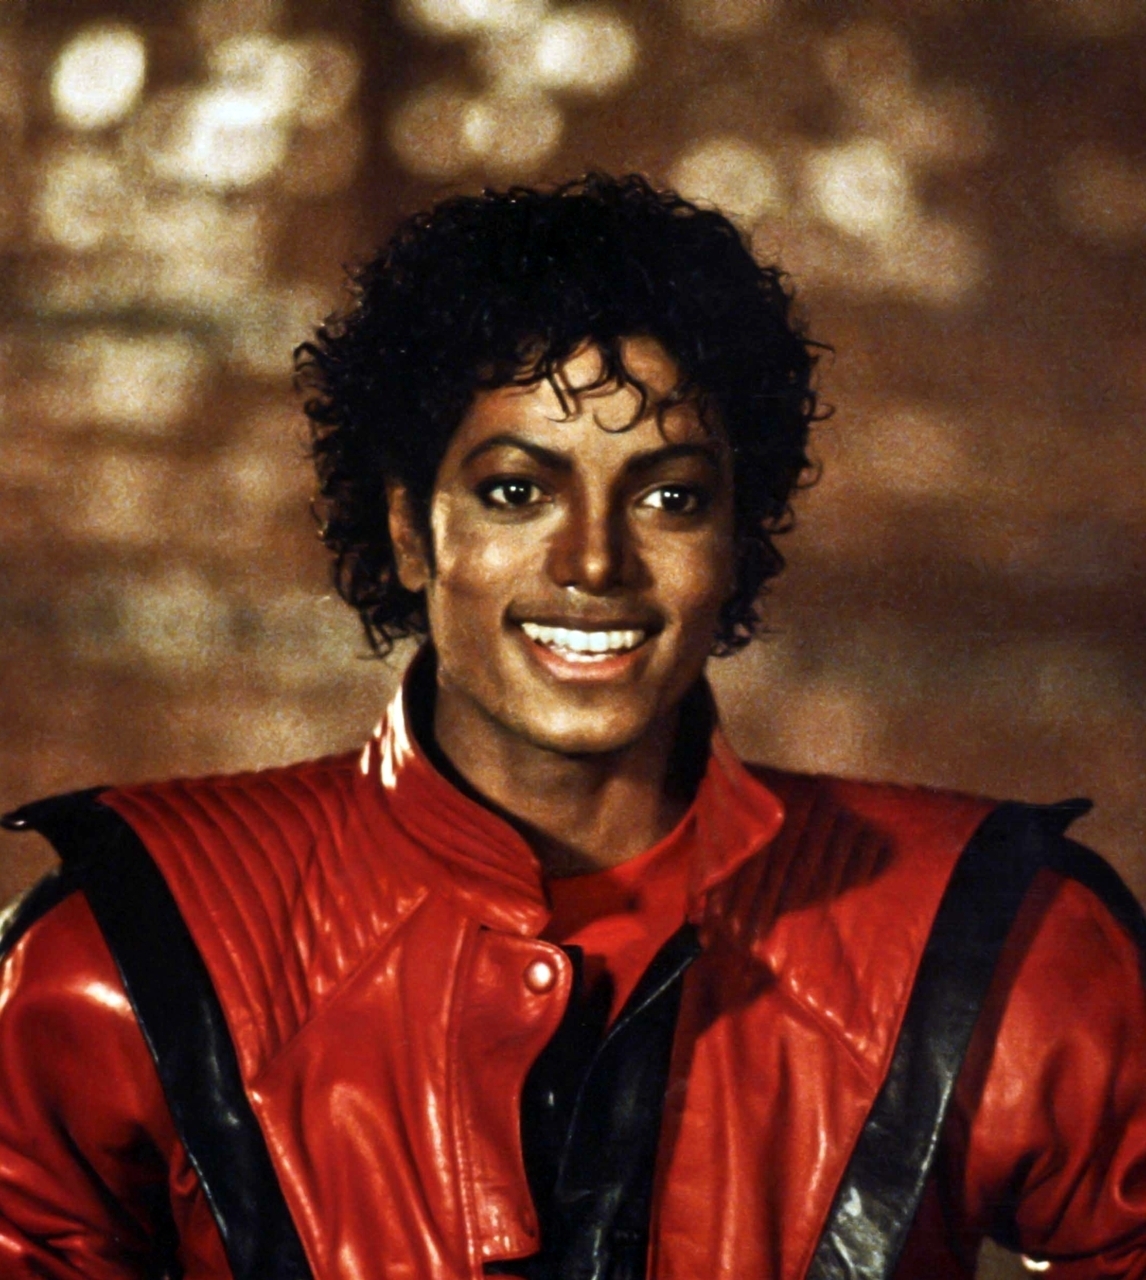 Thriller jacket - Wikipedia